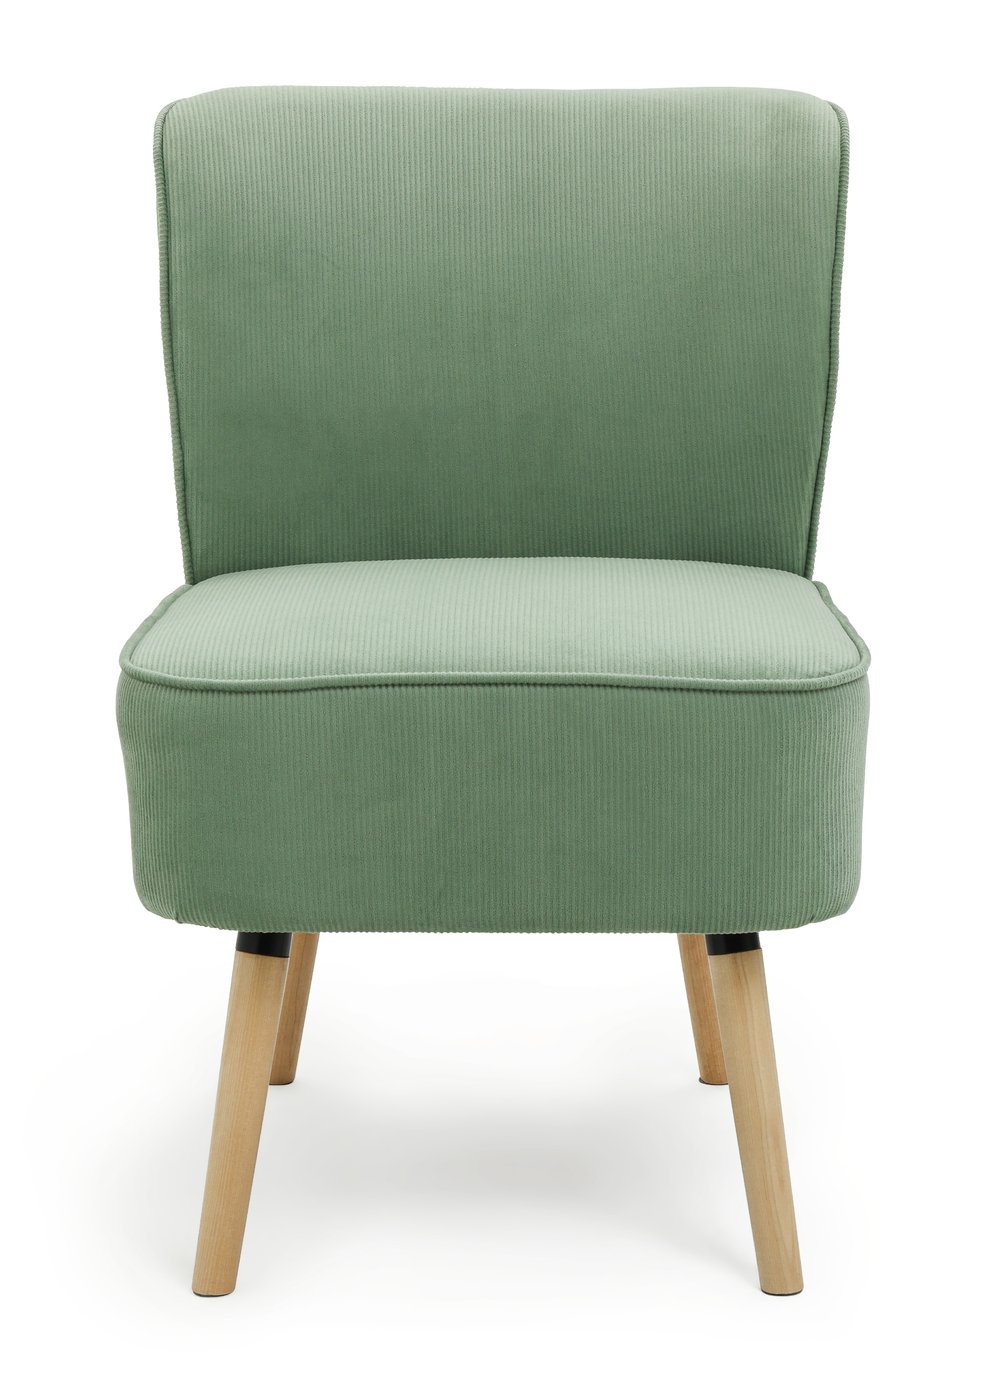 Habitat Eppy Fabric Accent Chair - Mint Green